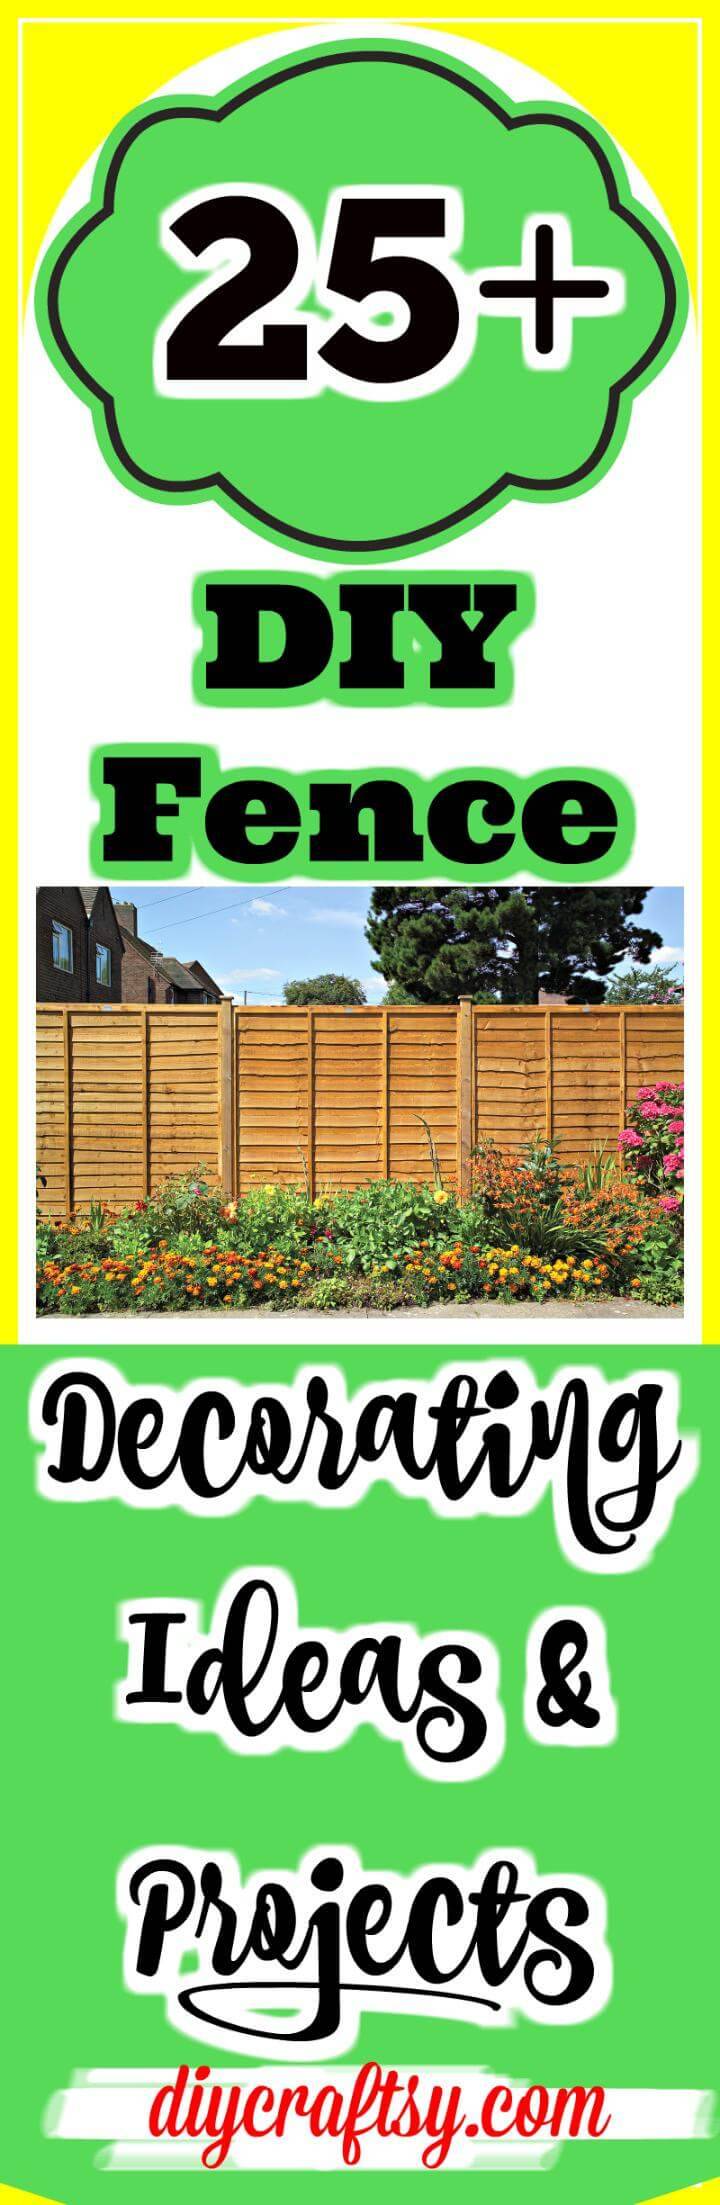 DIY Fence Decorating Ideas